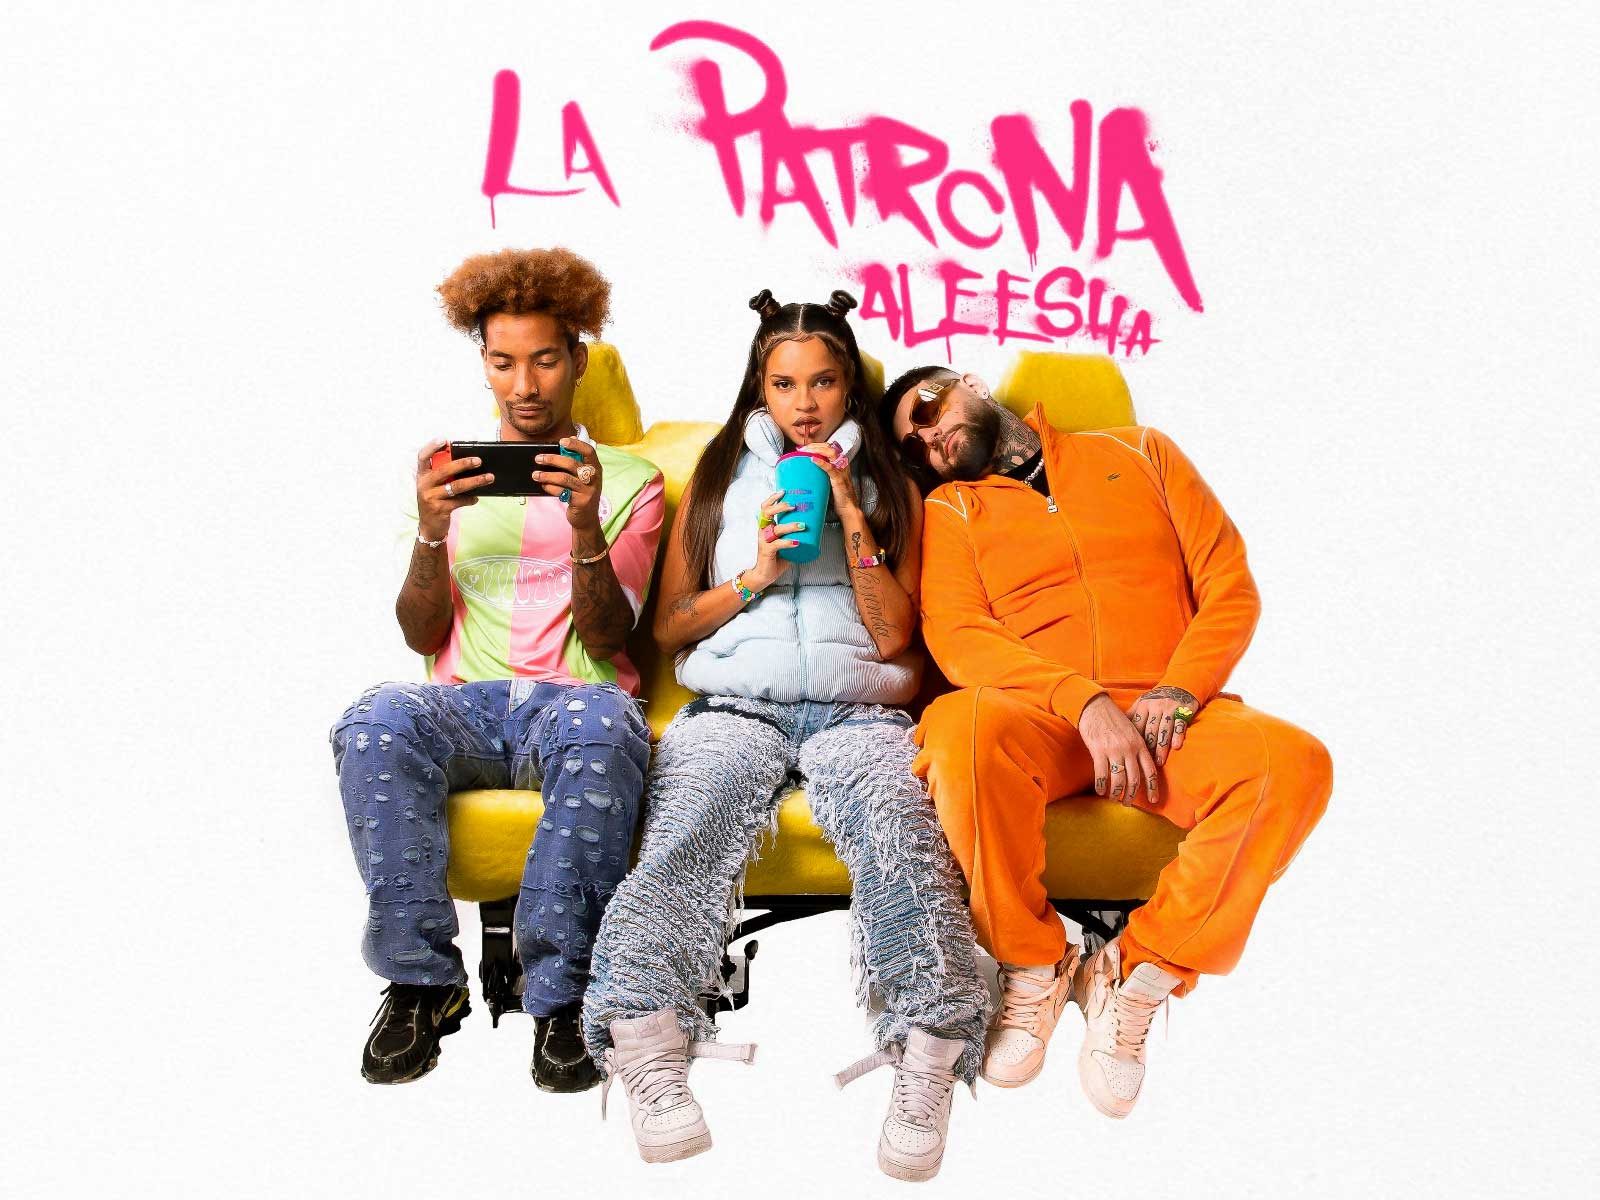 Aleesha arrives as ‘La Patrona’ with her new EP